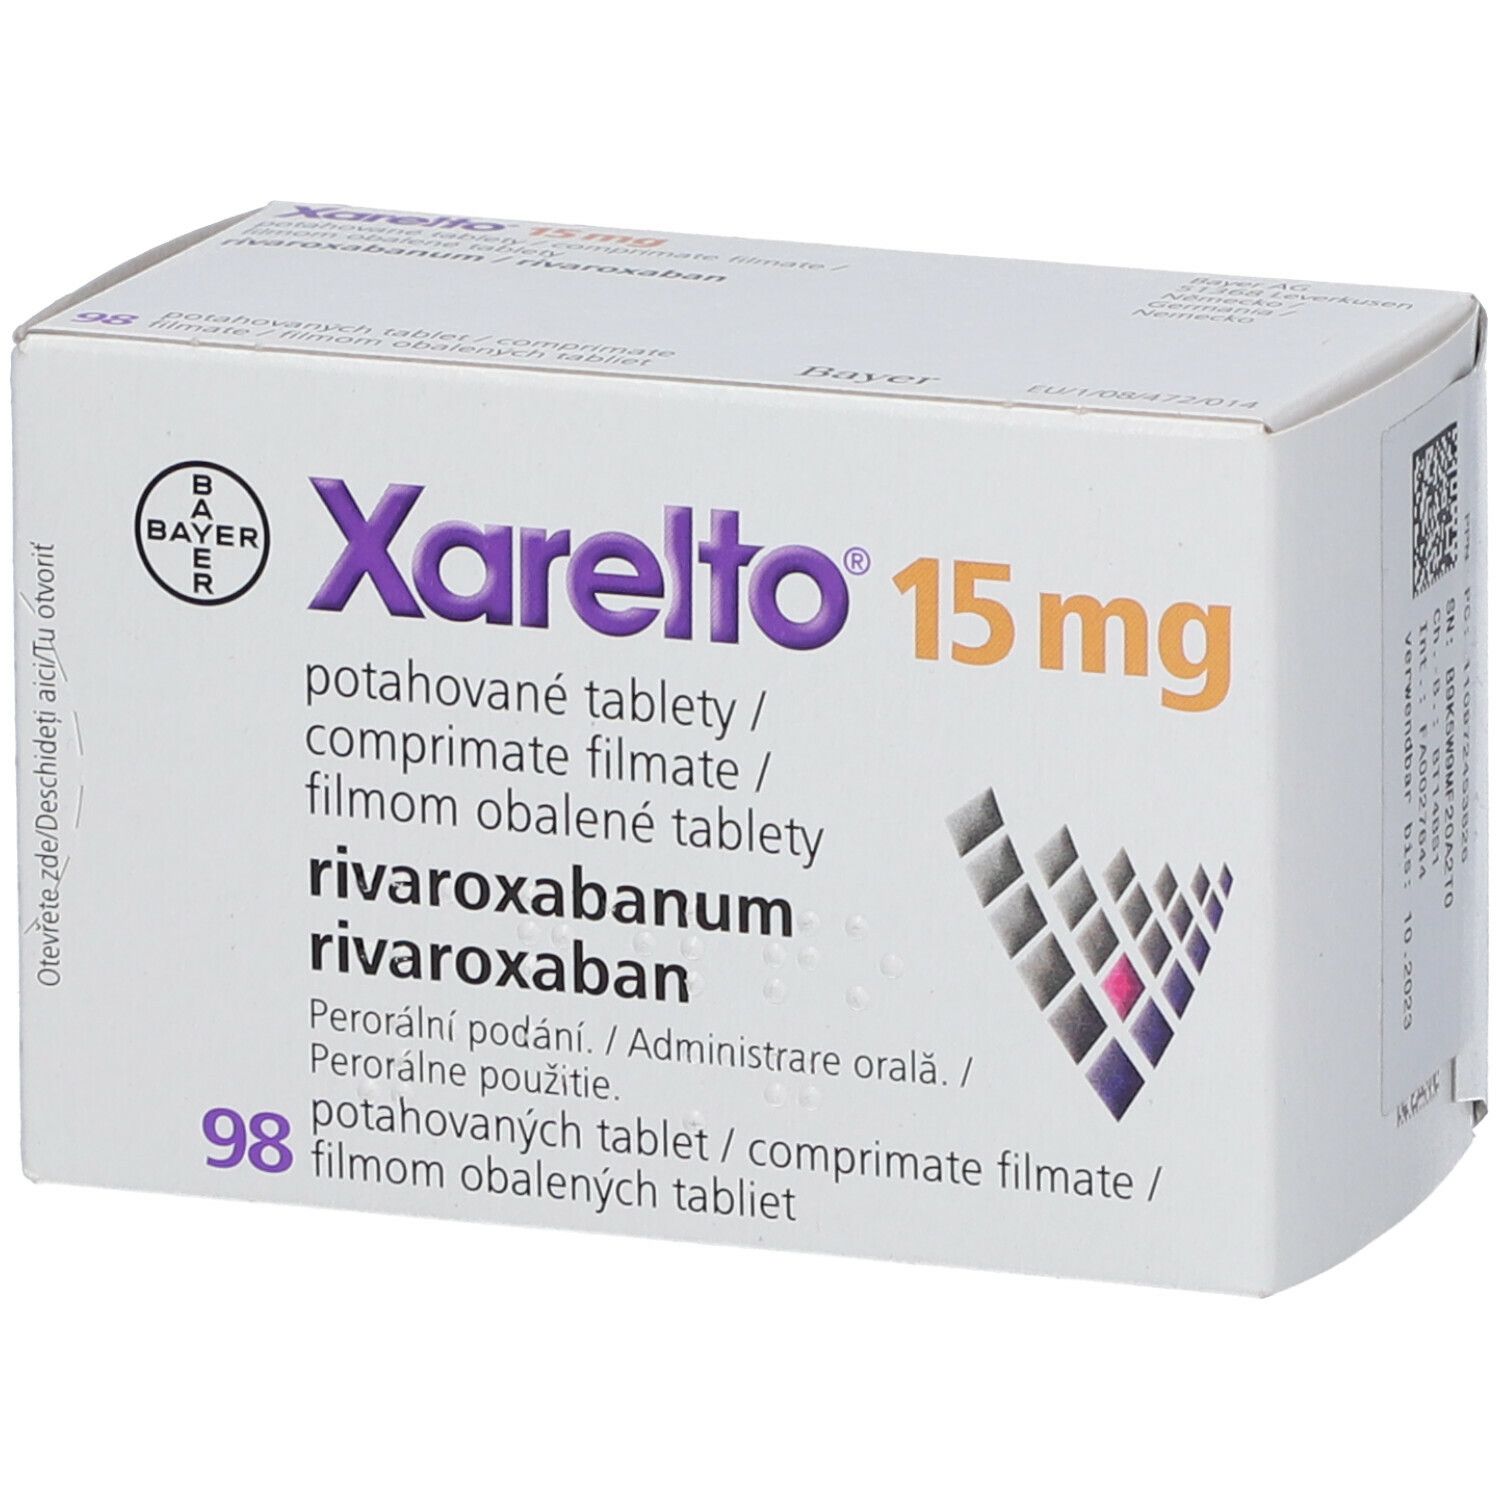 Xarelto® 15 mg